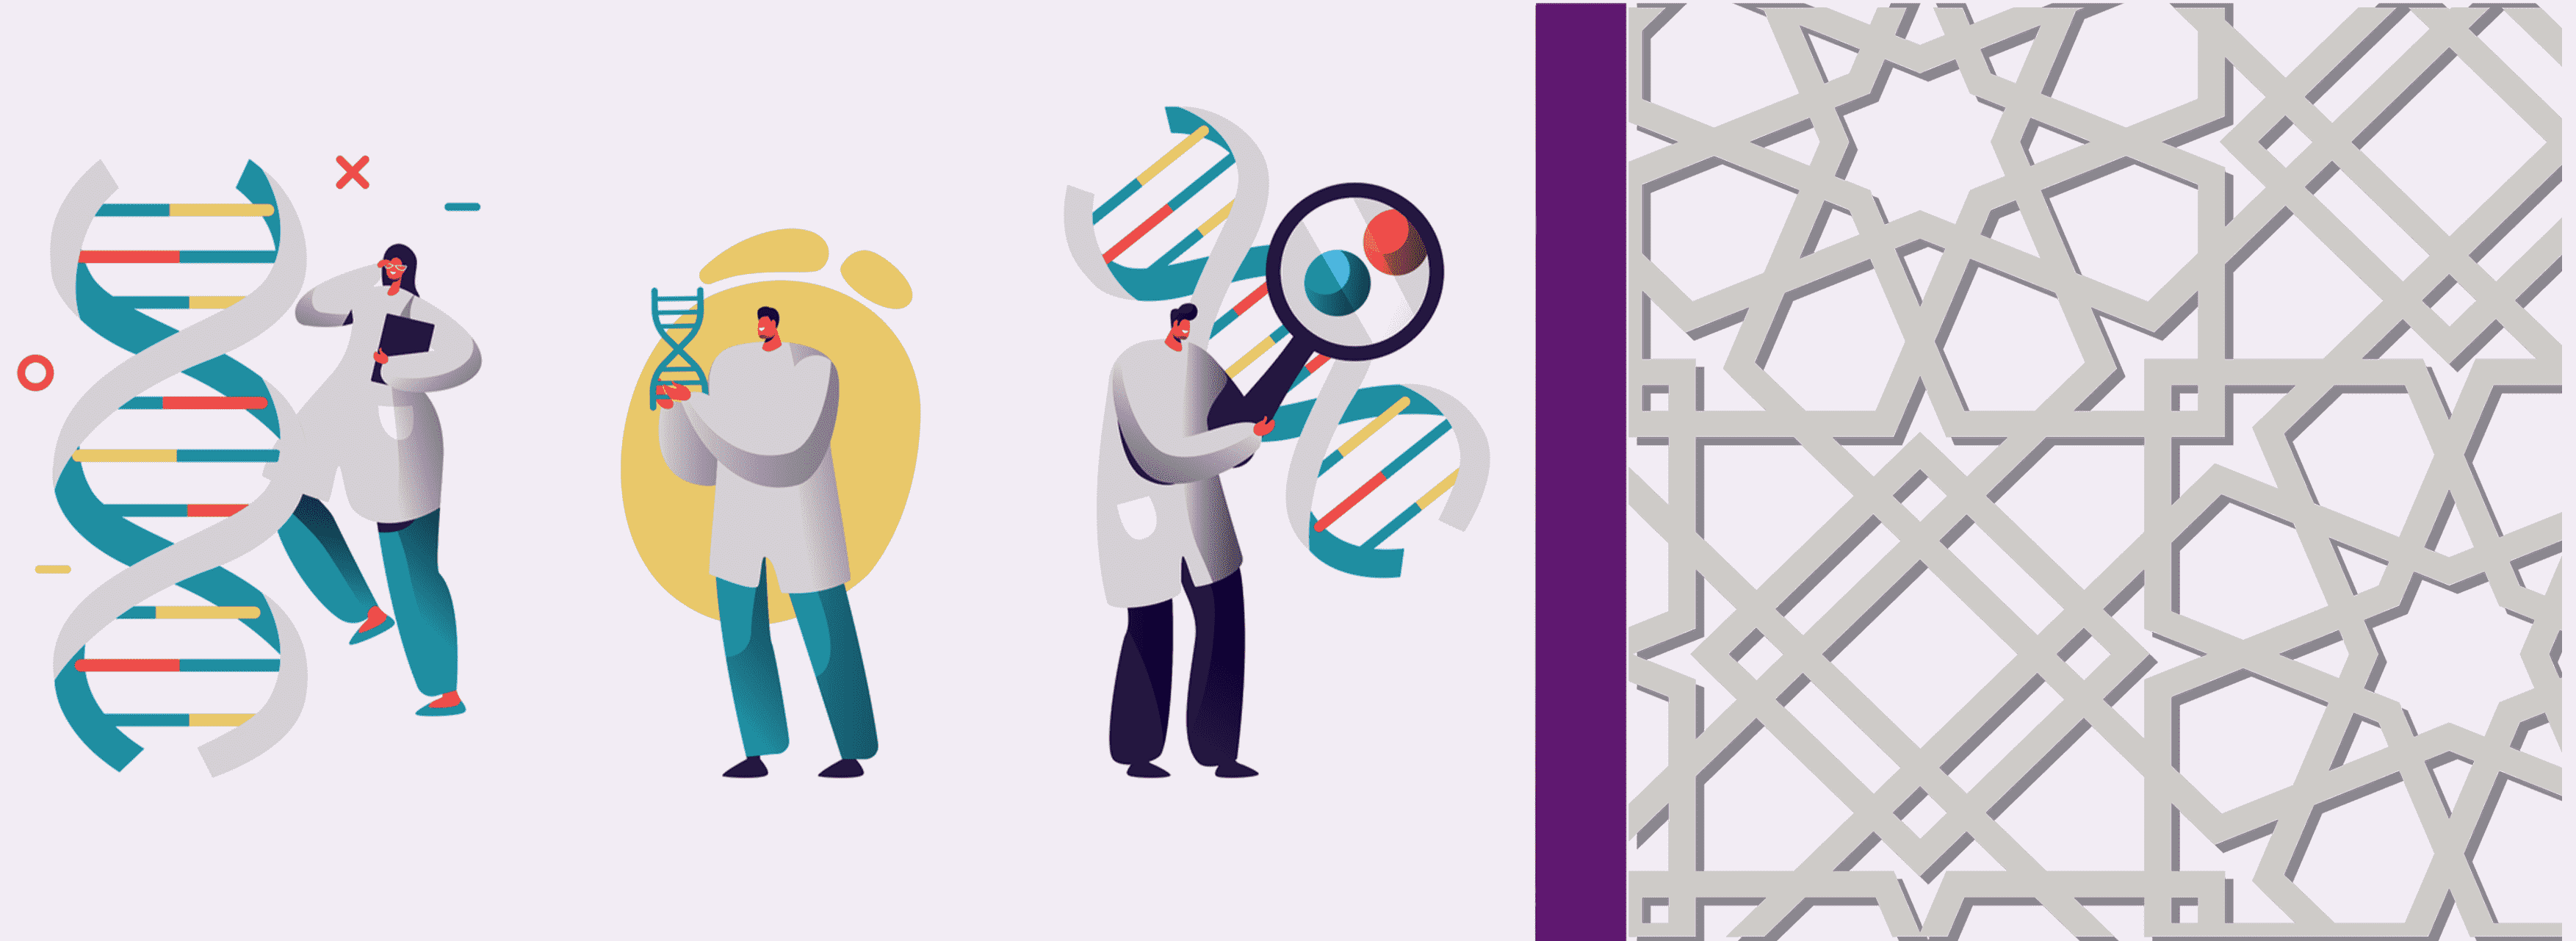 Invitation Webinar: Genomics: the history, science and ethics